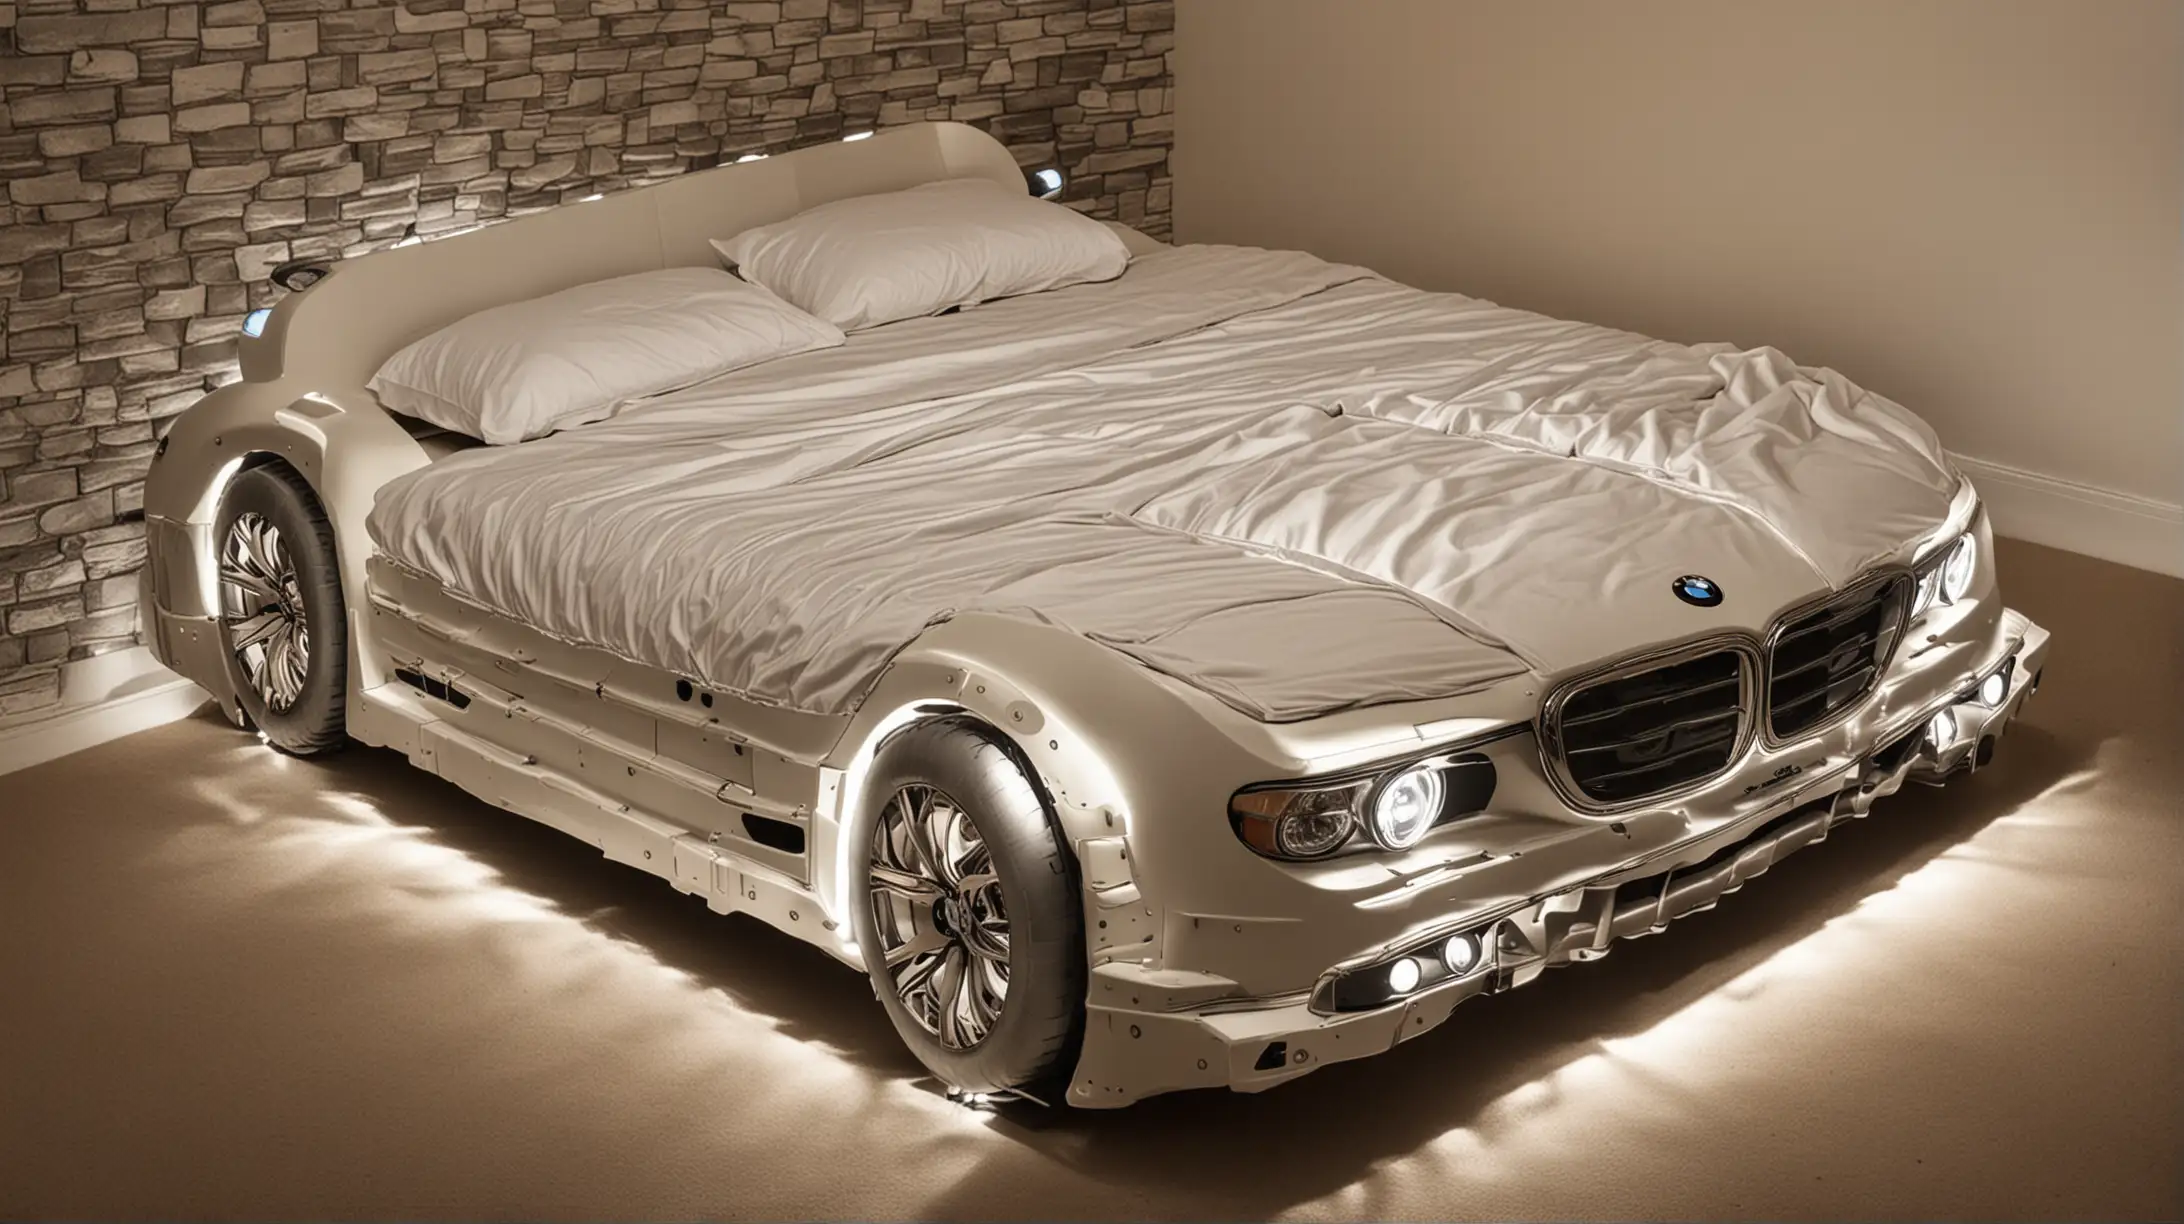 Luxury Double Bed Shaped like BMW Car with Illuminated Headlights